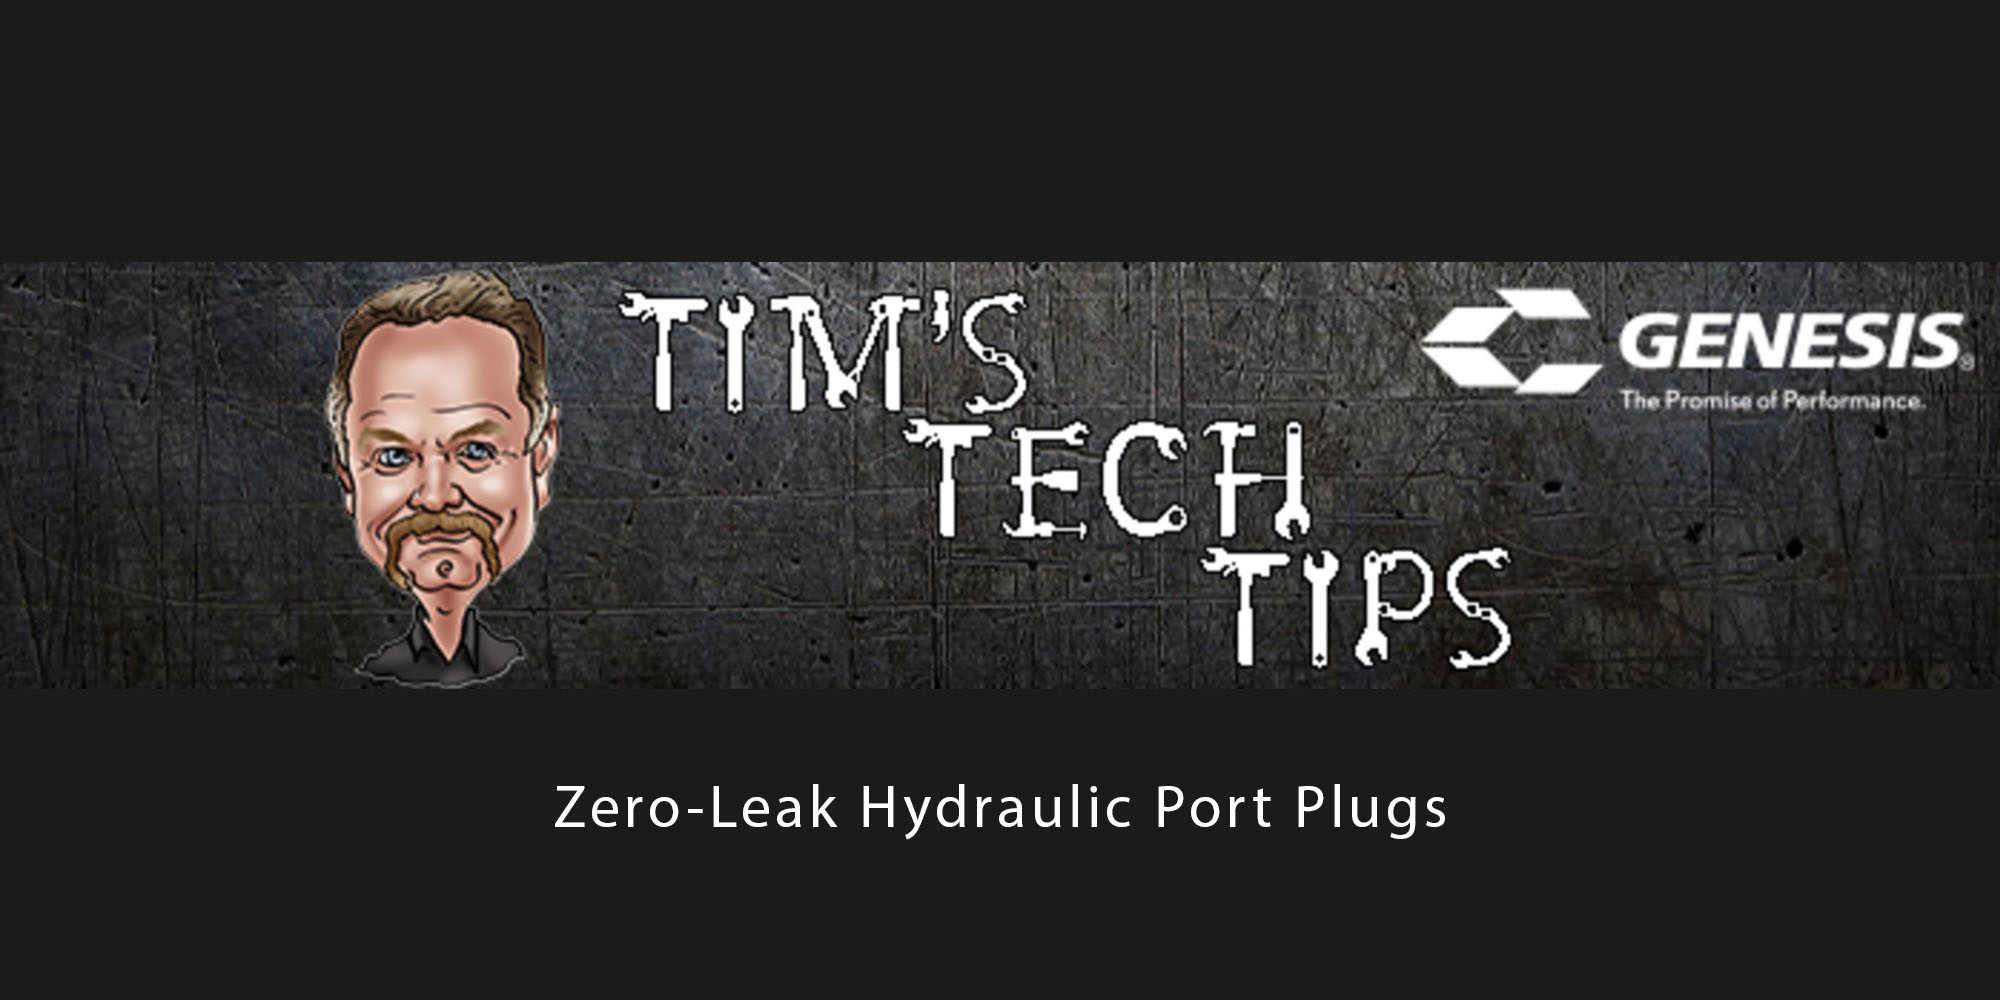 Tim's Tech Tips: Zero-Leak Hydraulic Port Plugs